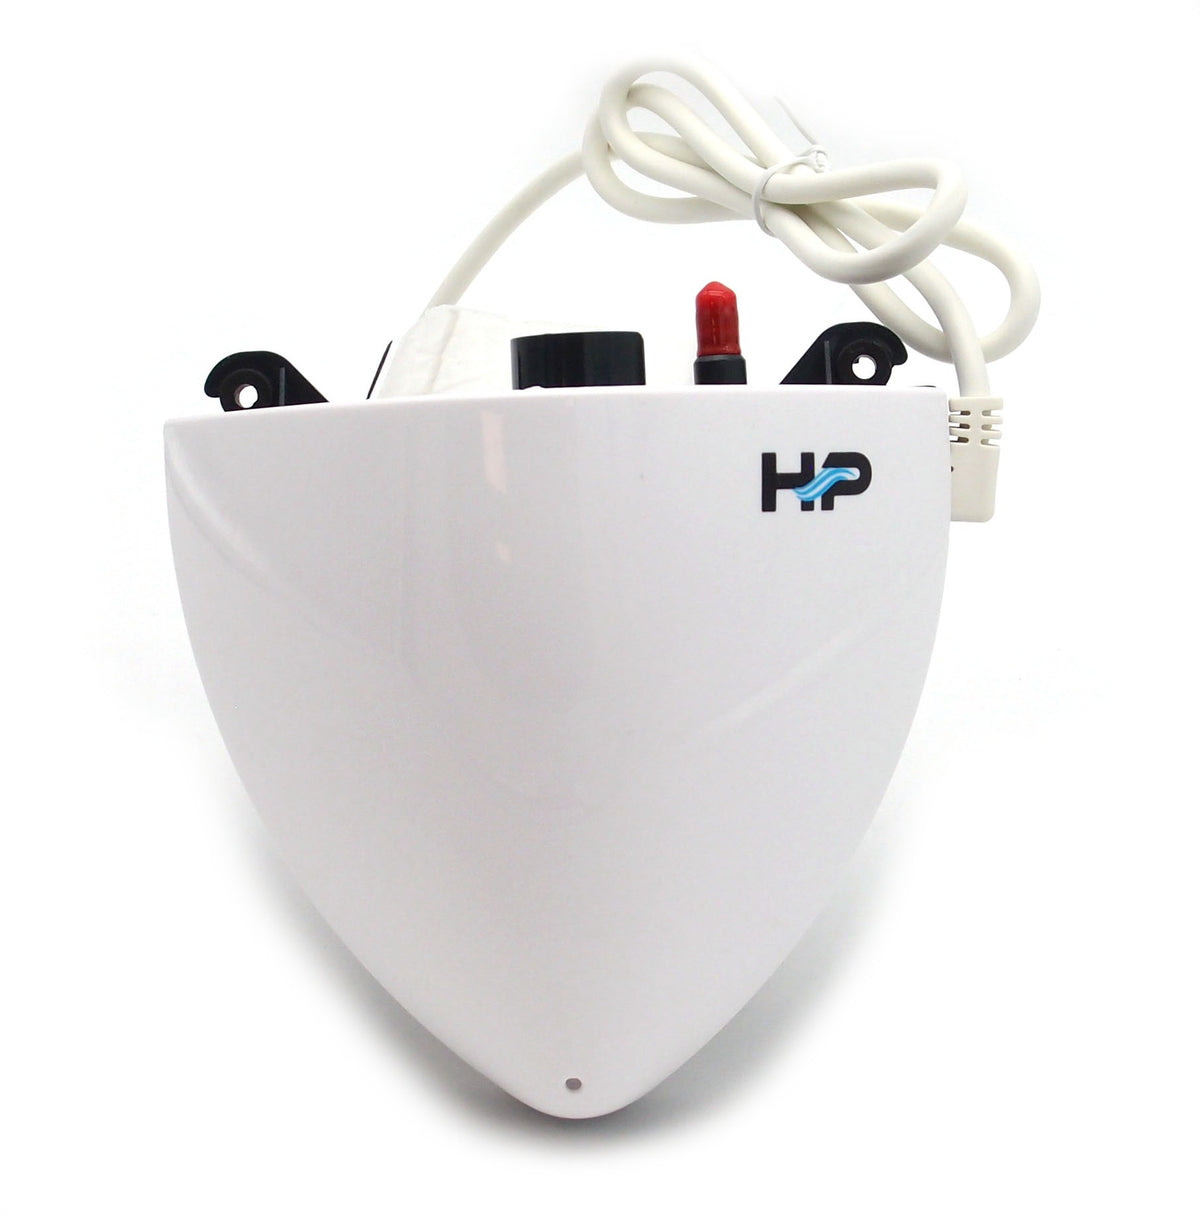 HVAC Premium Condensate Removal Pump - Heart Box – Automatic Safety Switch Sensor - 230V AC 50-60Hz Voltage